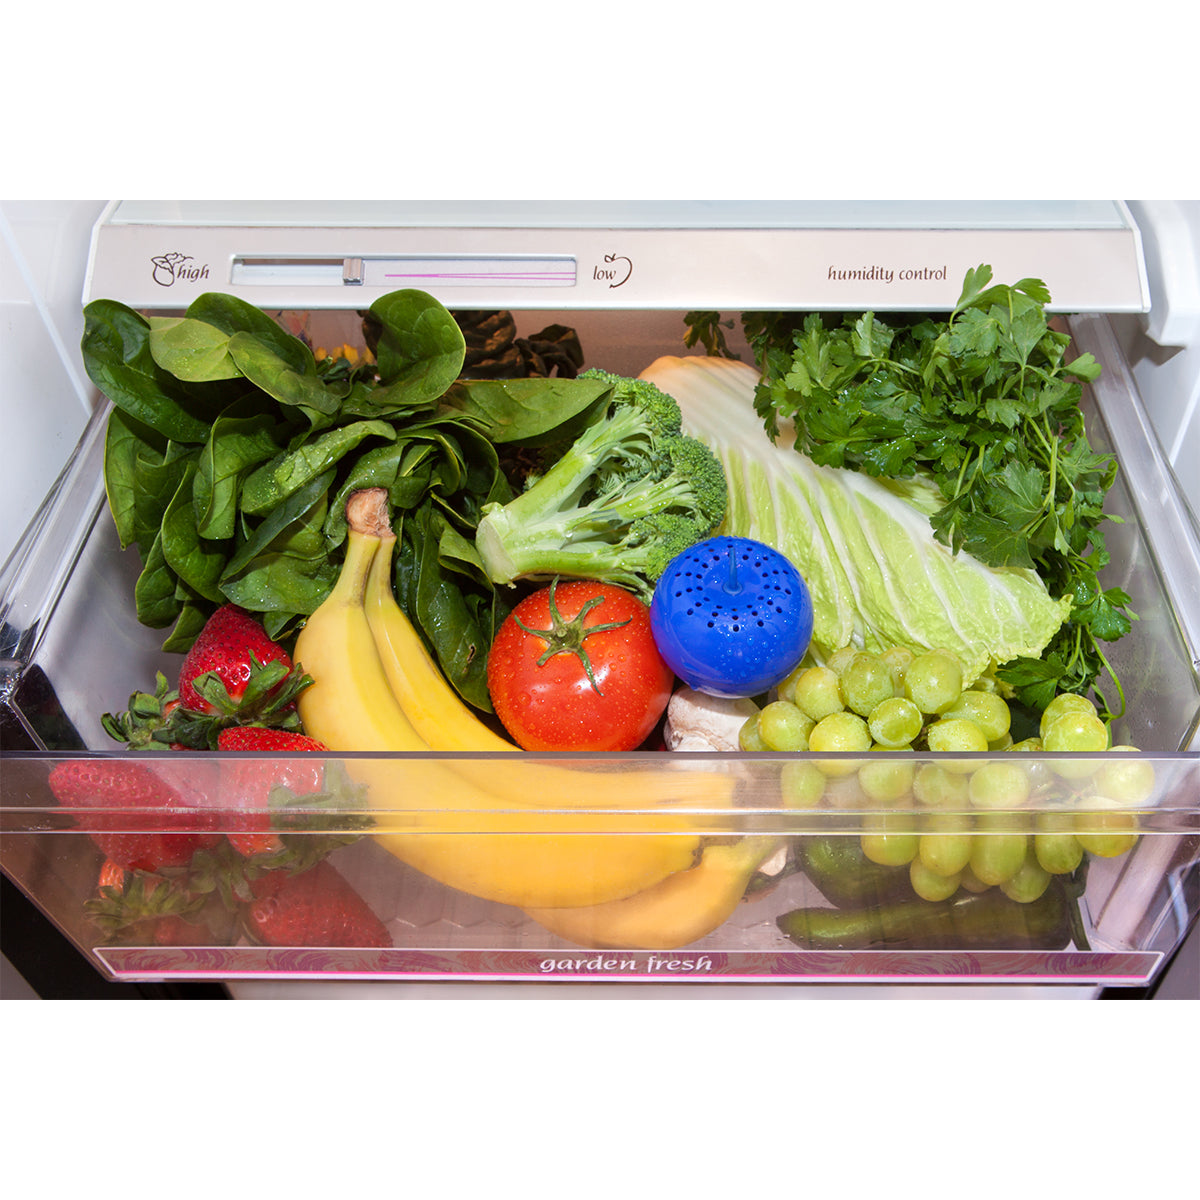 Bluapple Classic Produce Saver 15-Month Bundle, Vegetable & Fruit